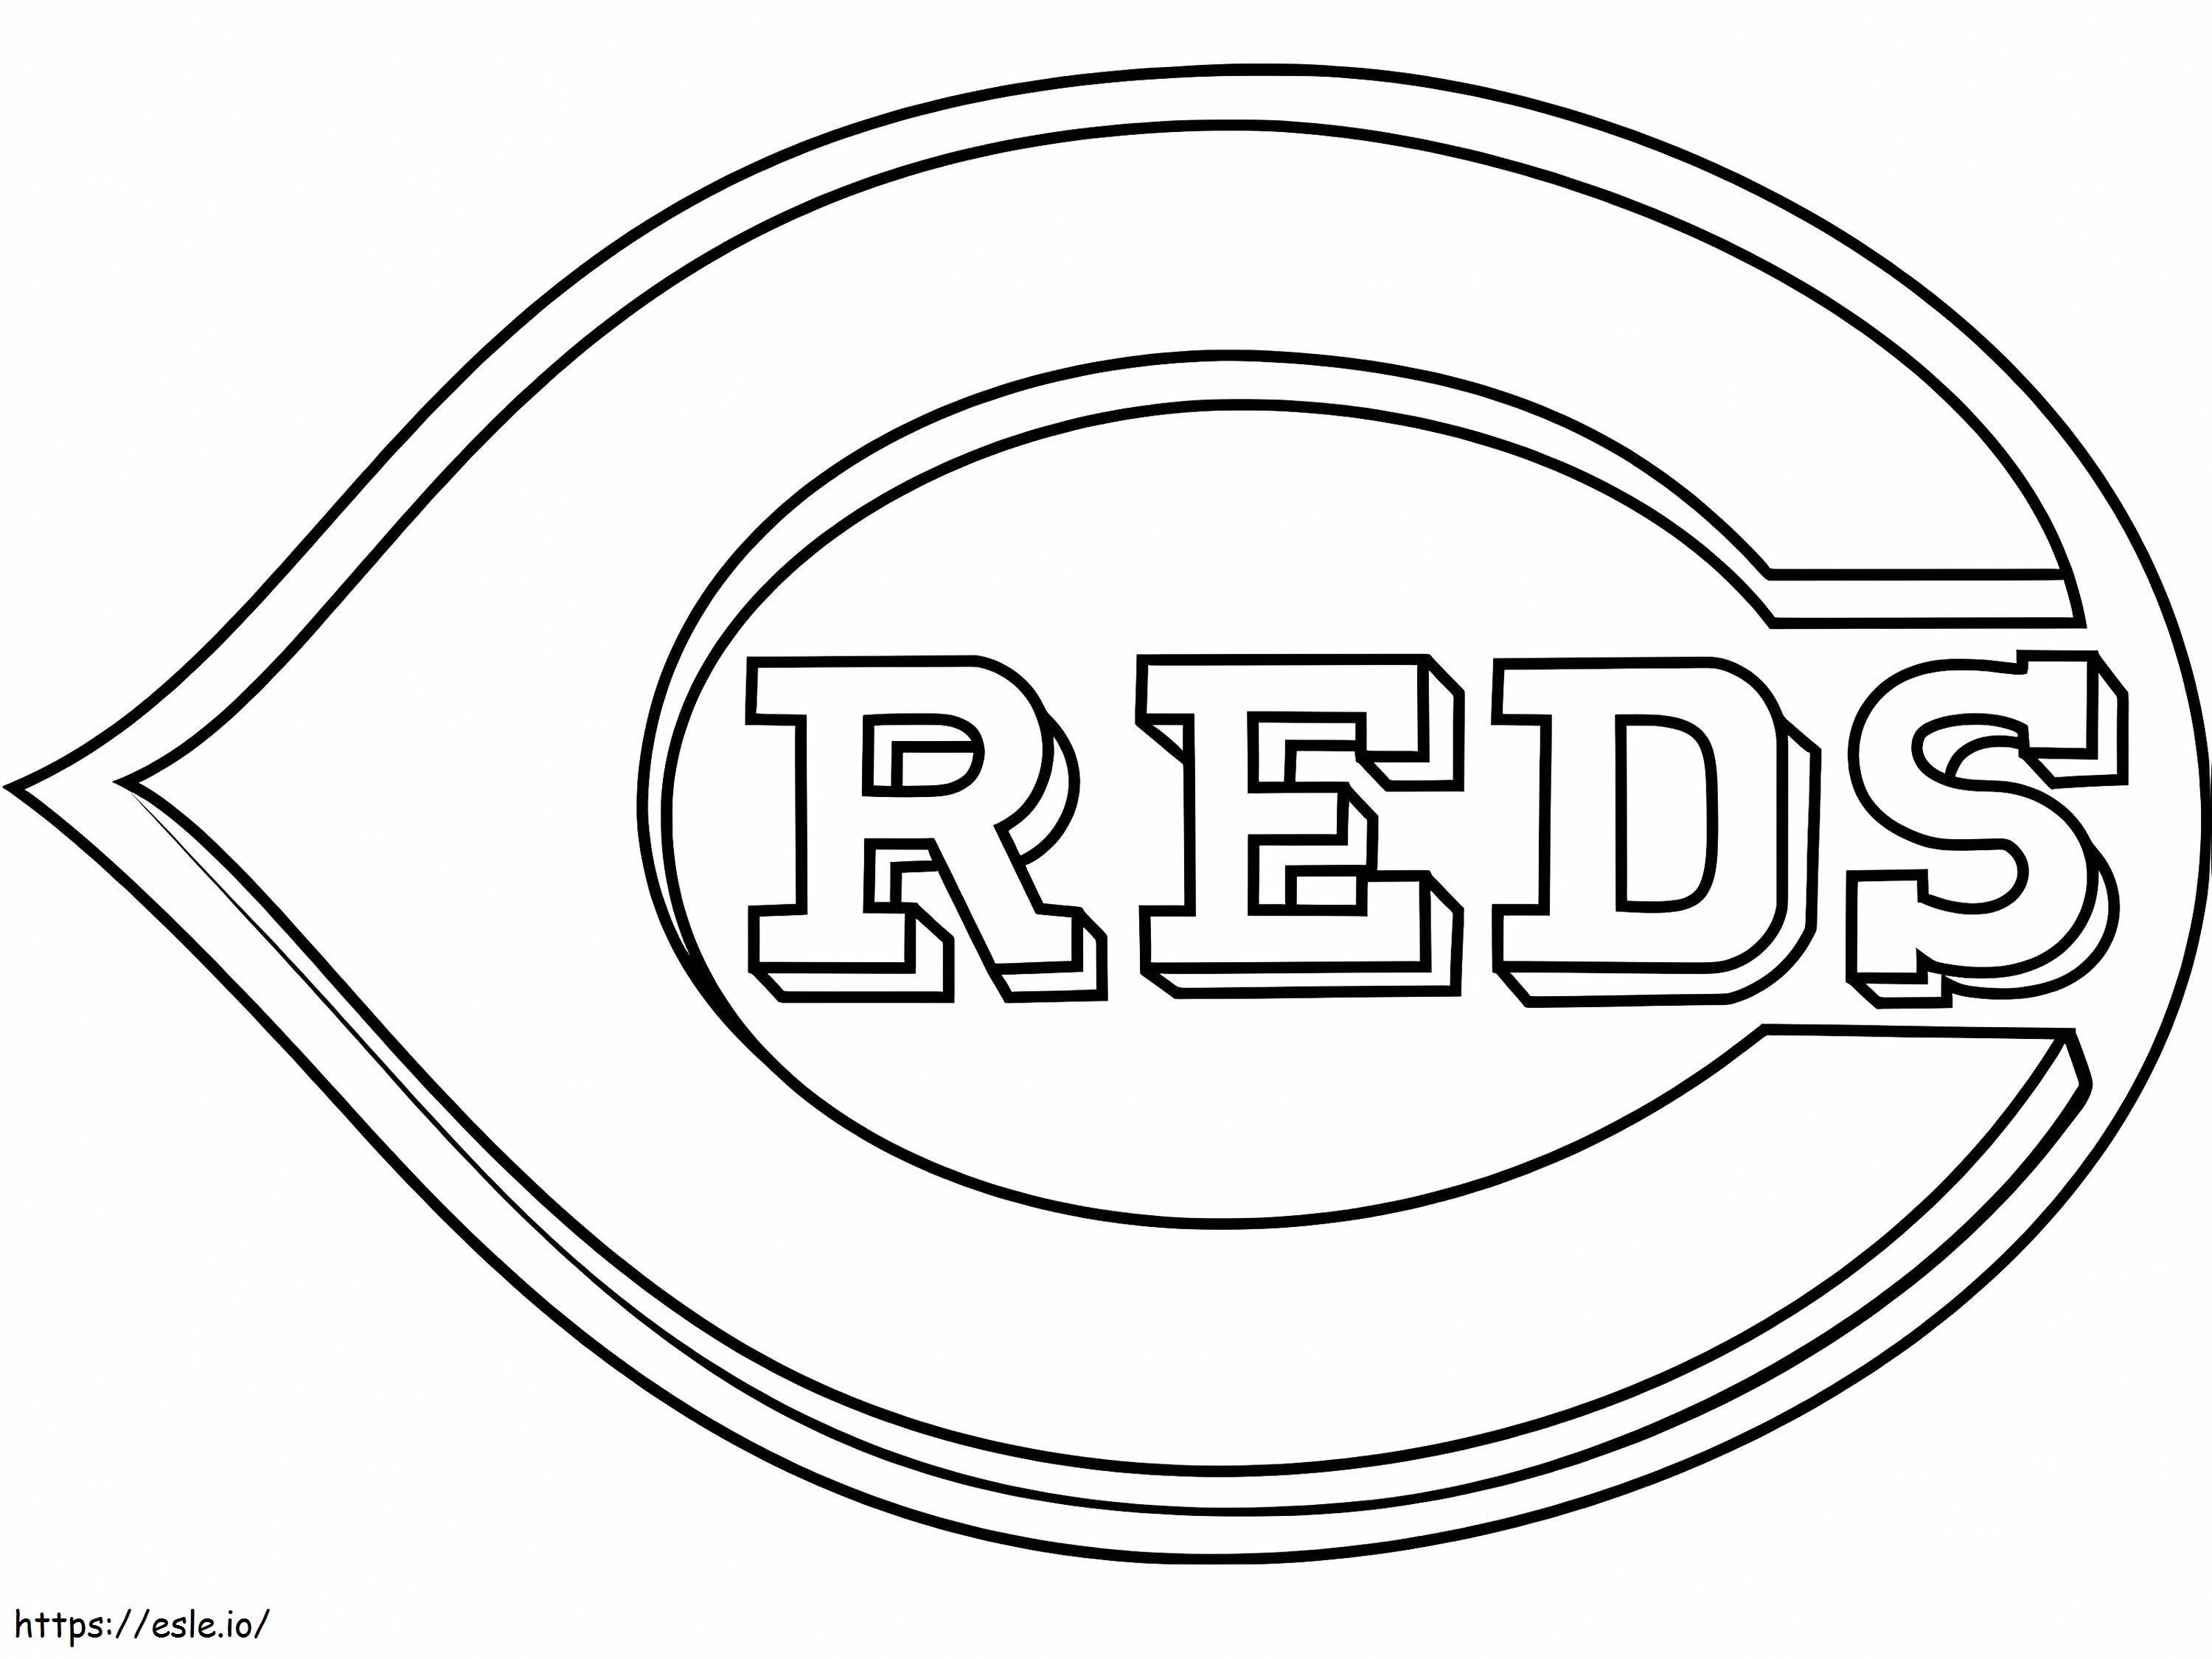 Cincinnati Reds-logo kleurplaat kleurplaat